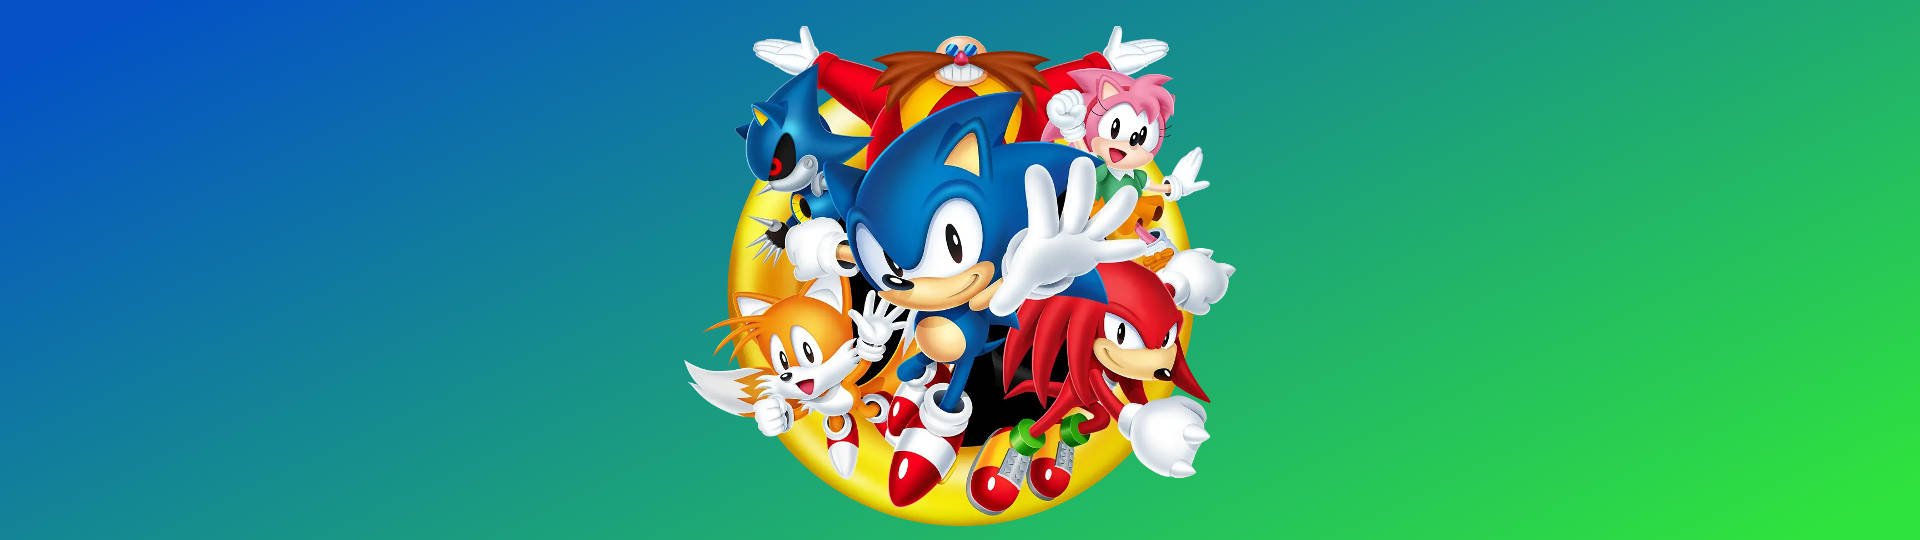 Sonic Origins delisting old Sonic games slice